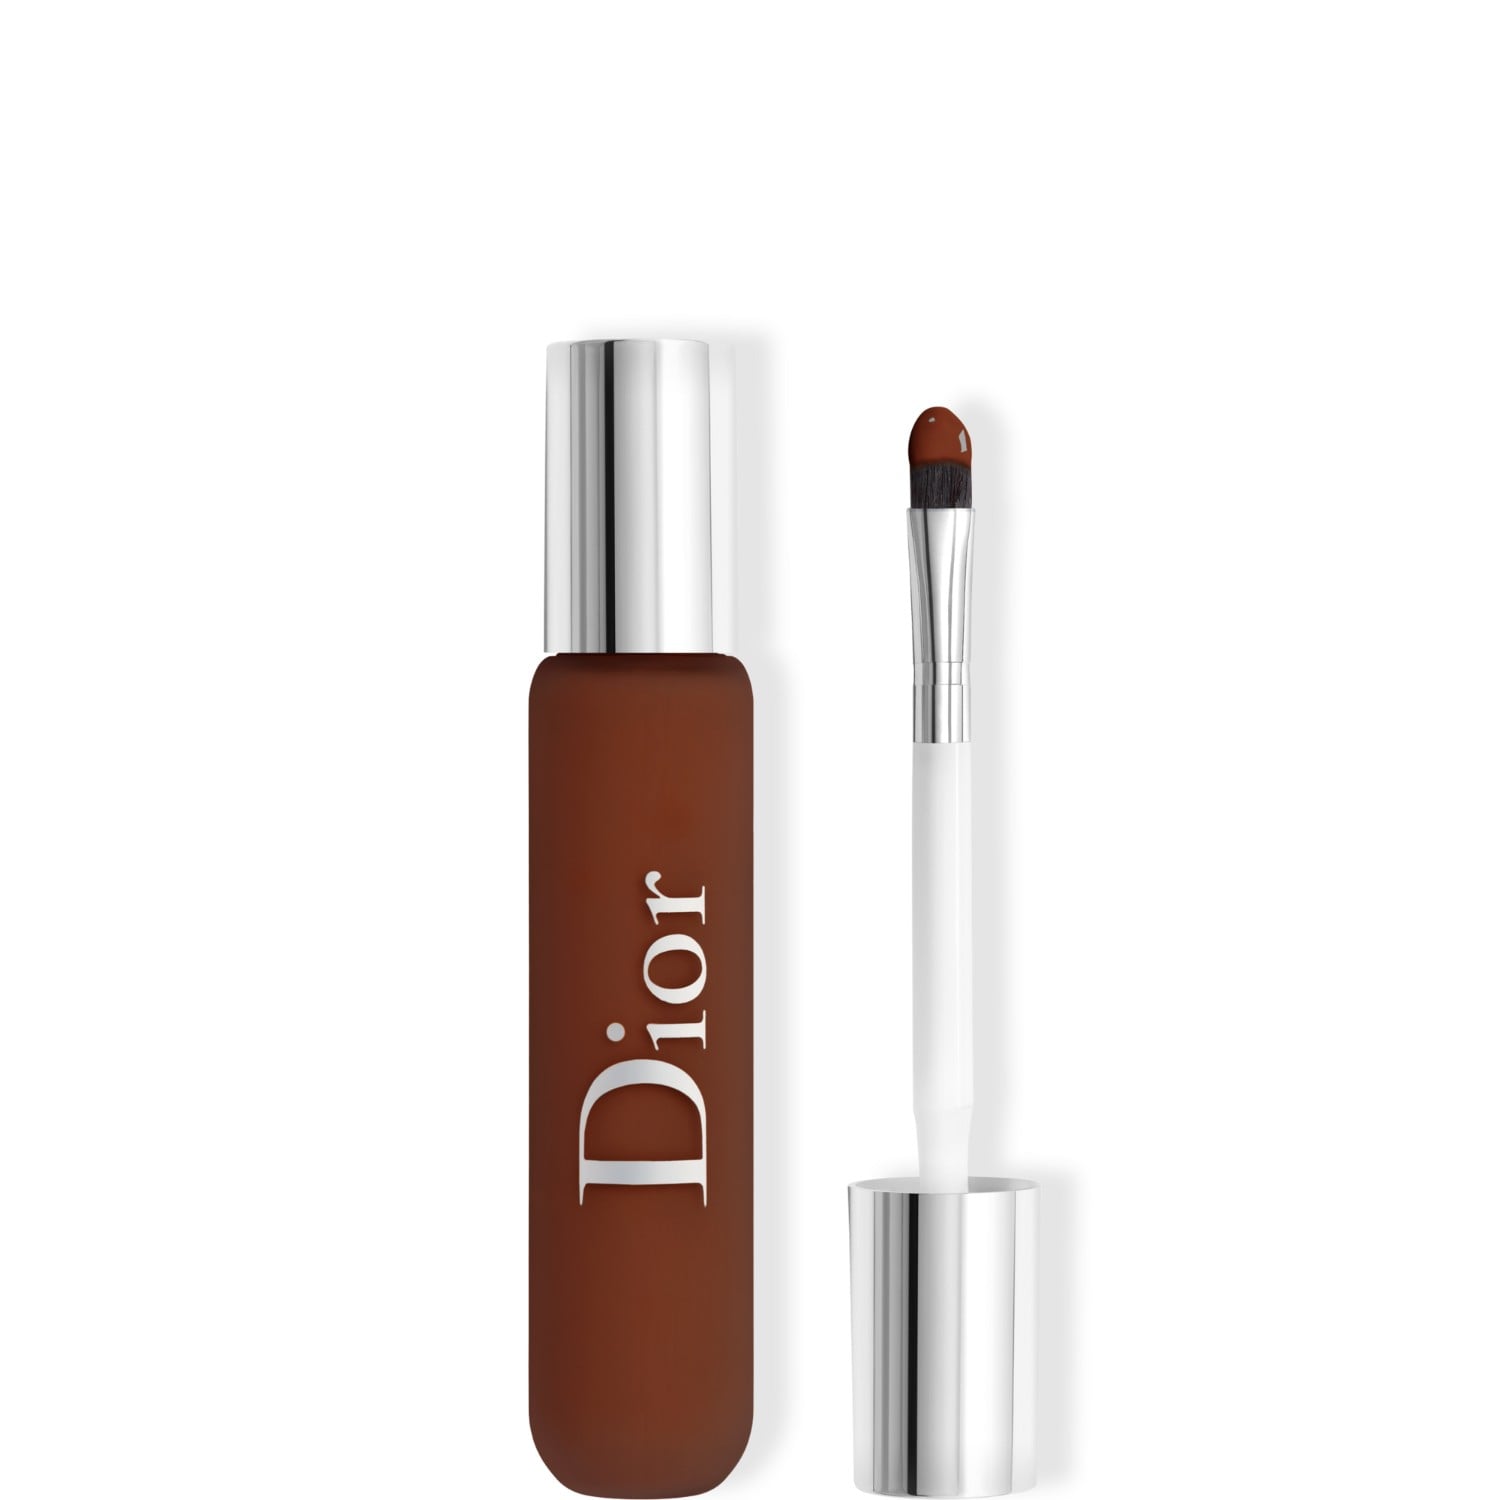 Dior Backstage Dior Backstage Face & Body Flash Perfector Concealer, No. 9n neutral